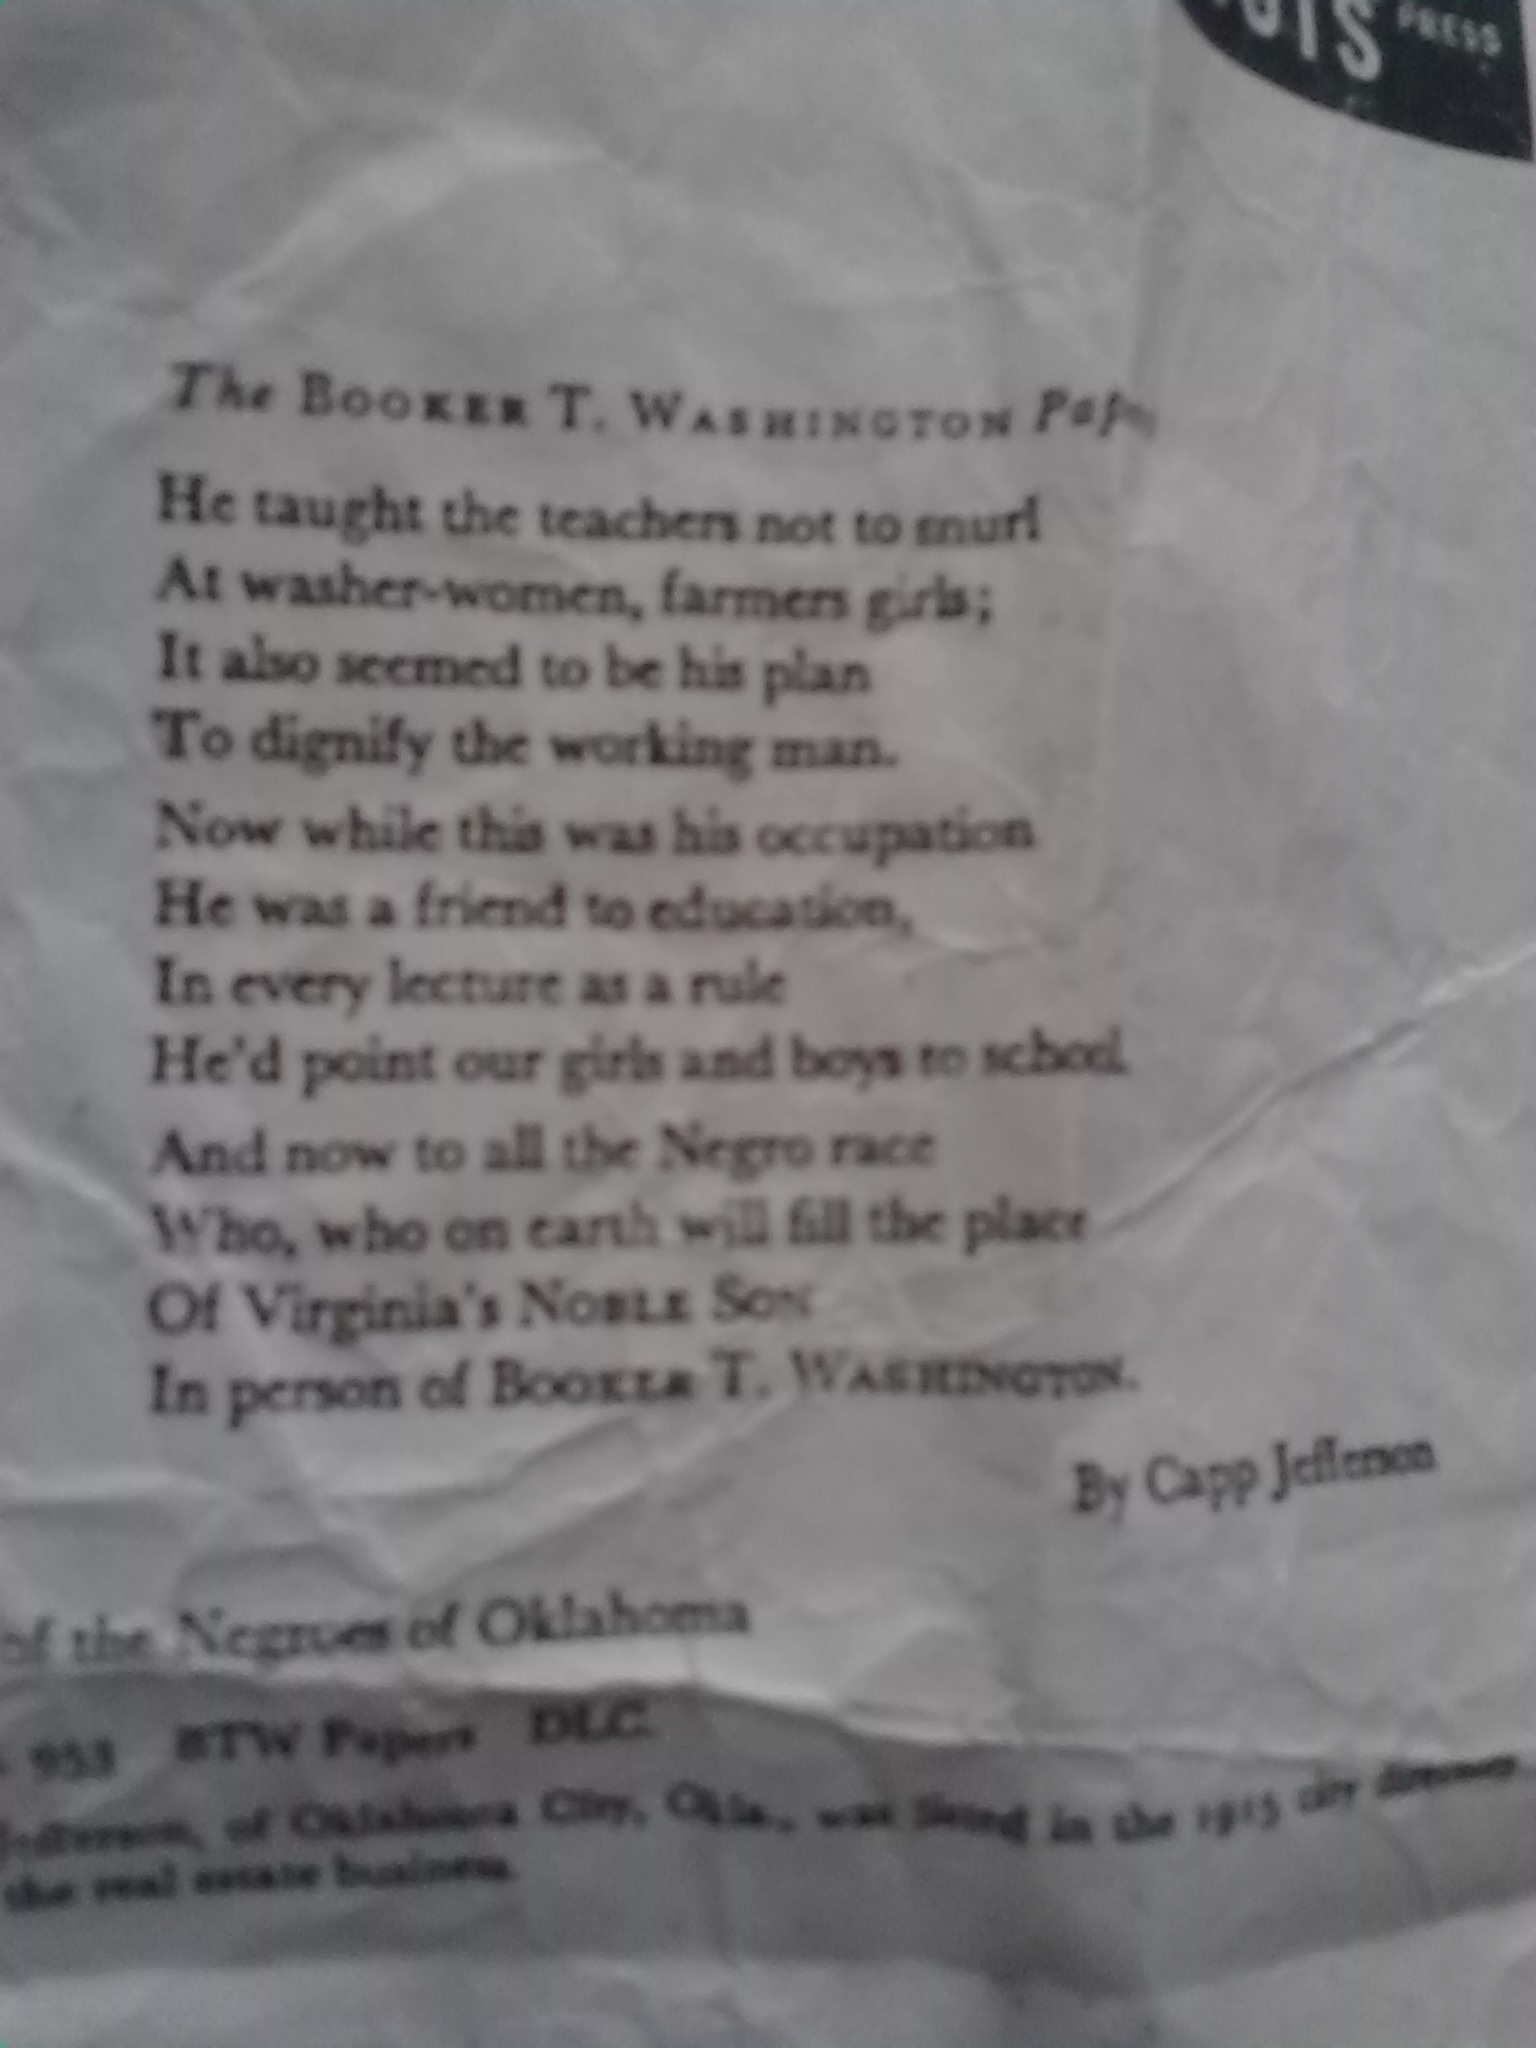 Poem by Cap Jefferson